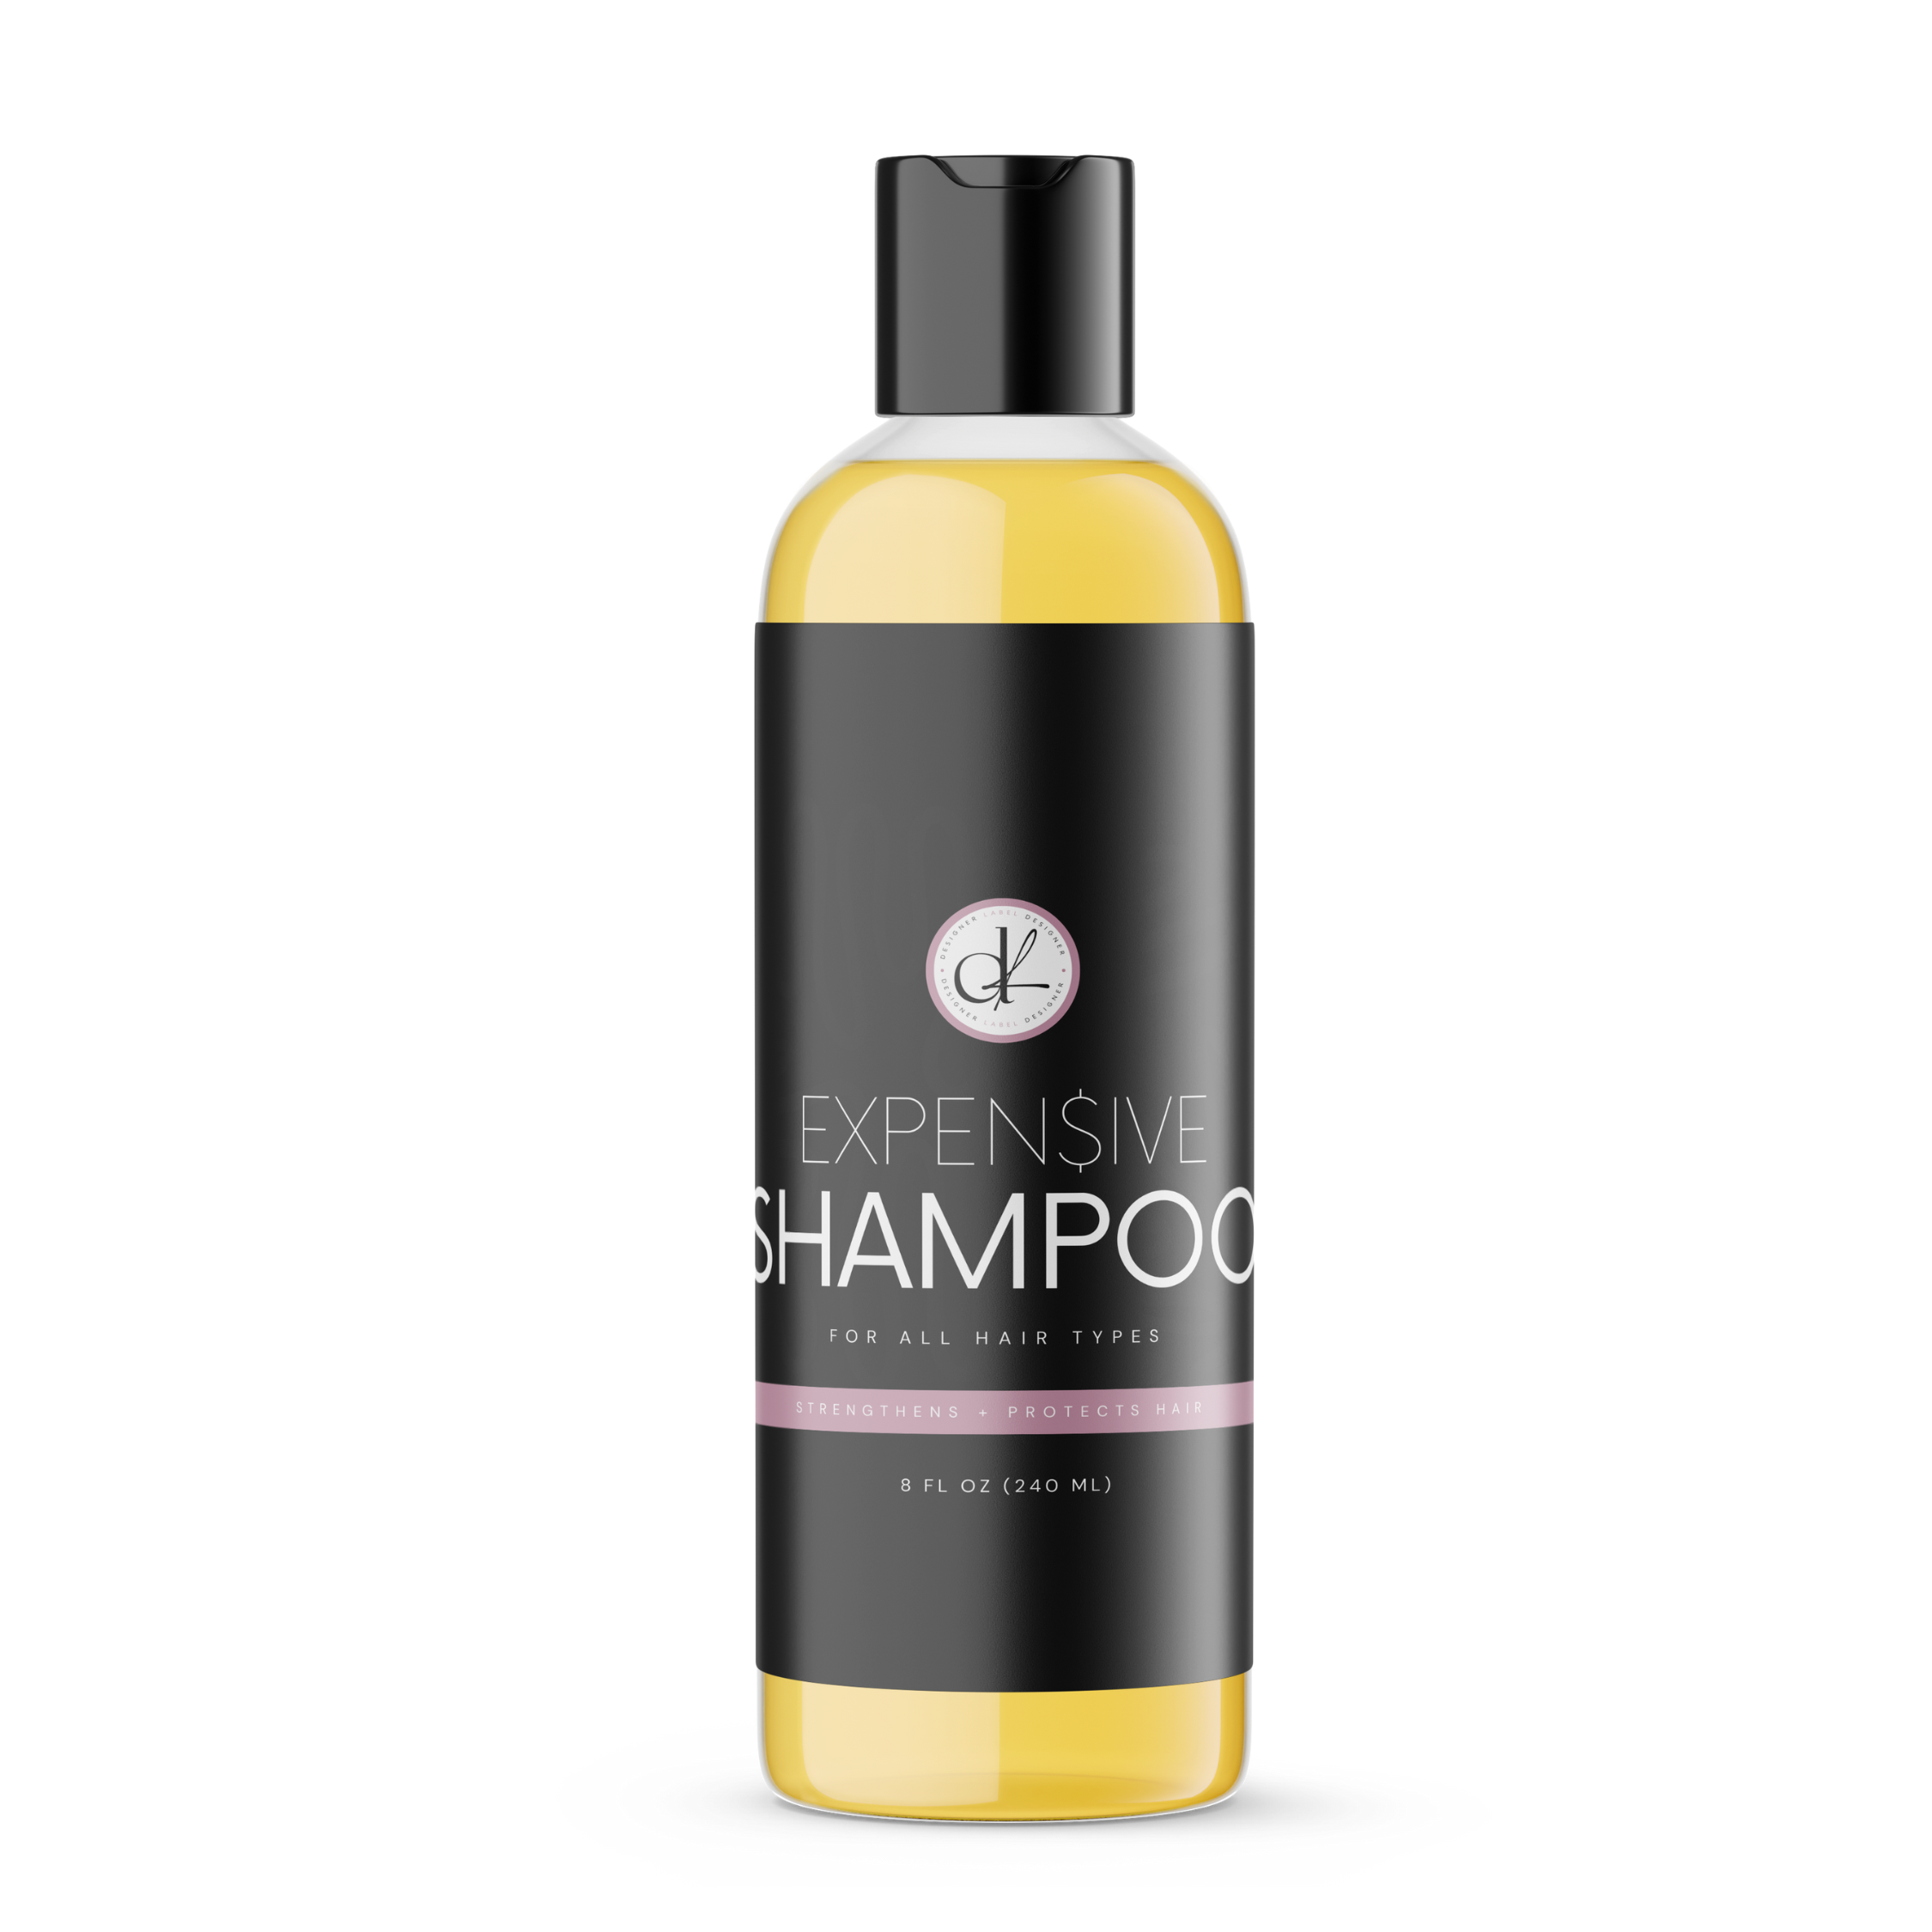 Expen$ive Shampoo